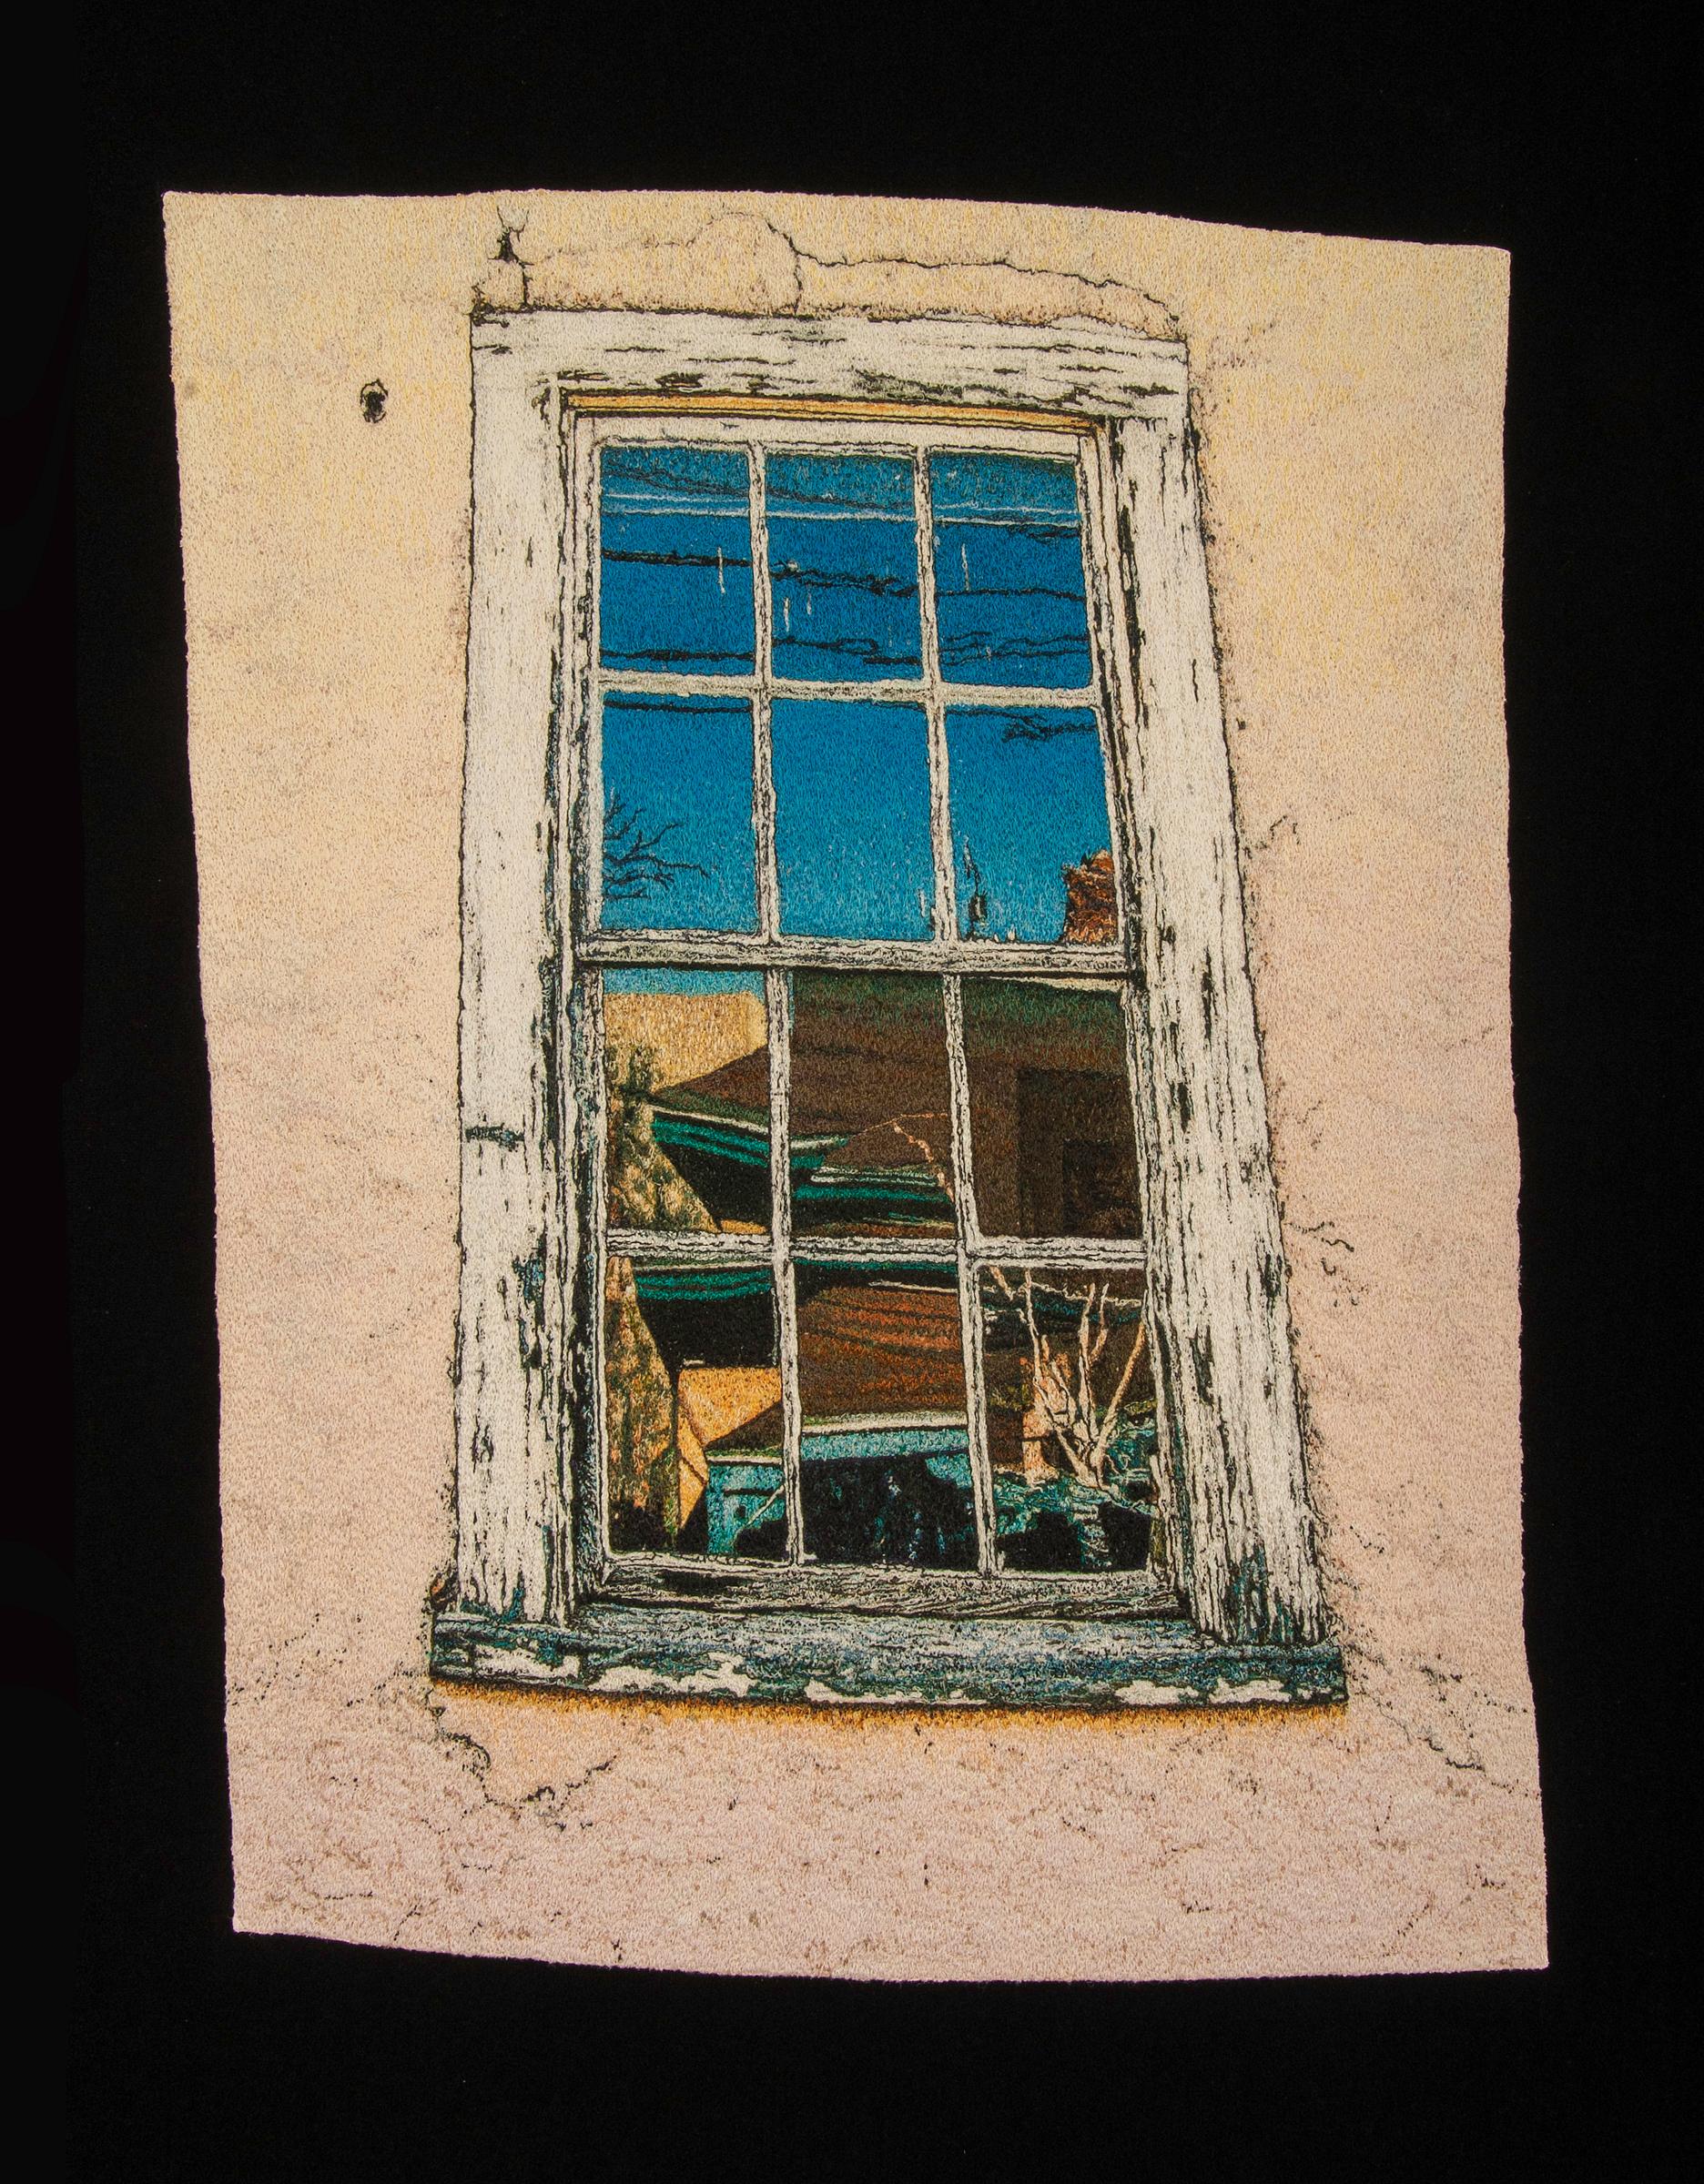 "Window Reflections", framed photorealistic embroidery, textile, fiber, craft - Art by Carol Shinn